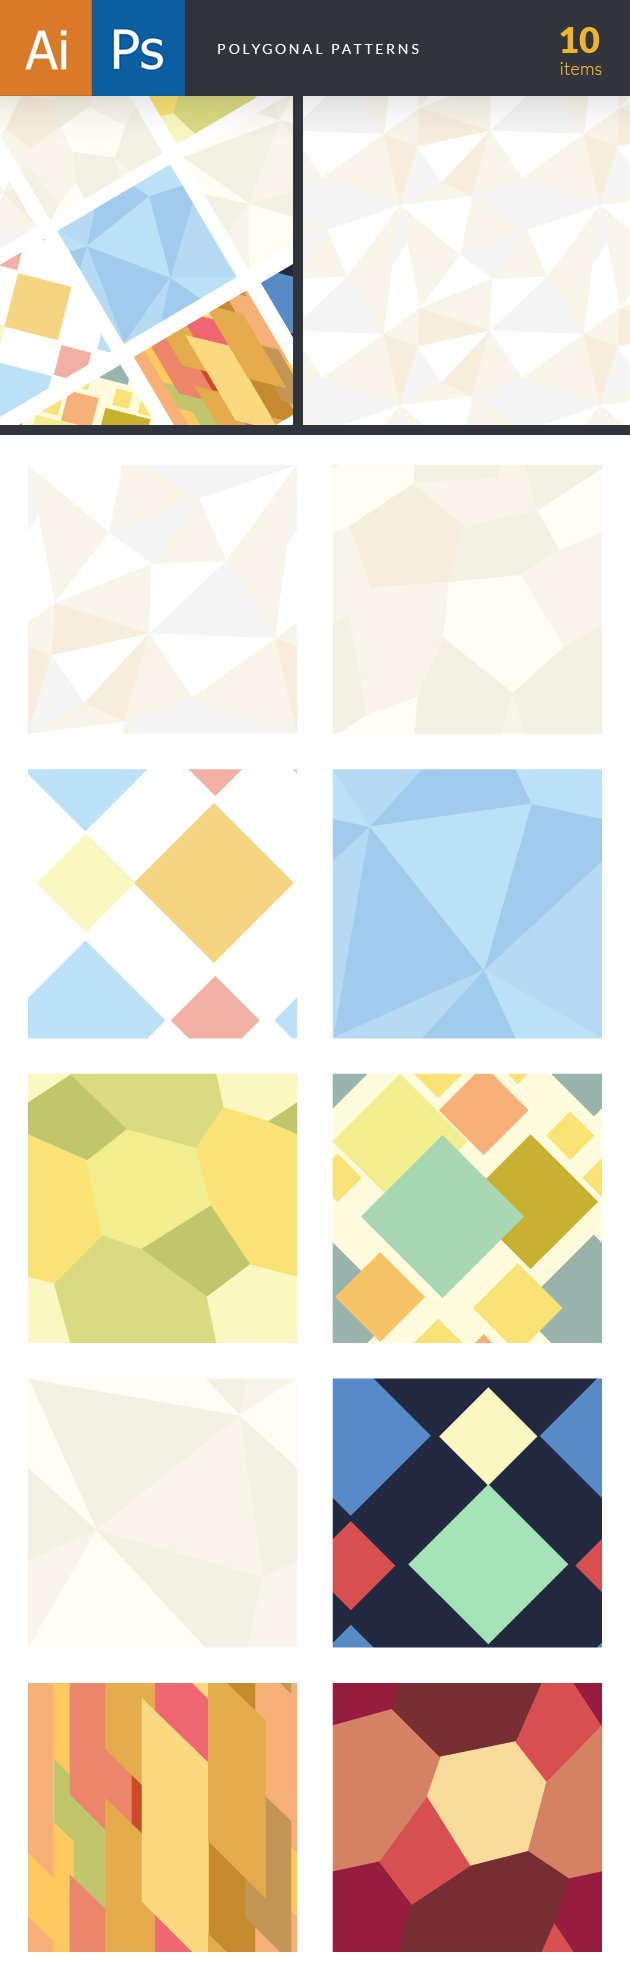 designtnt-patterns-polygonal-large